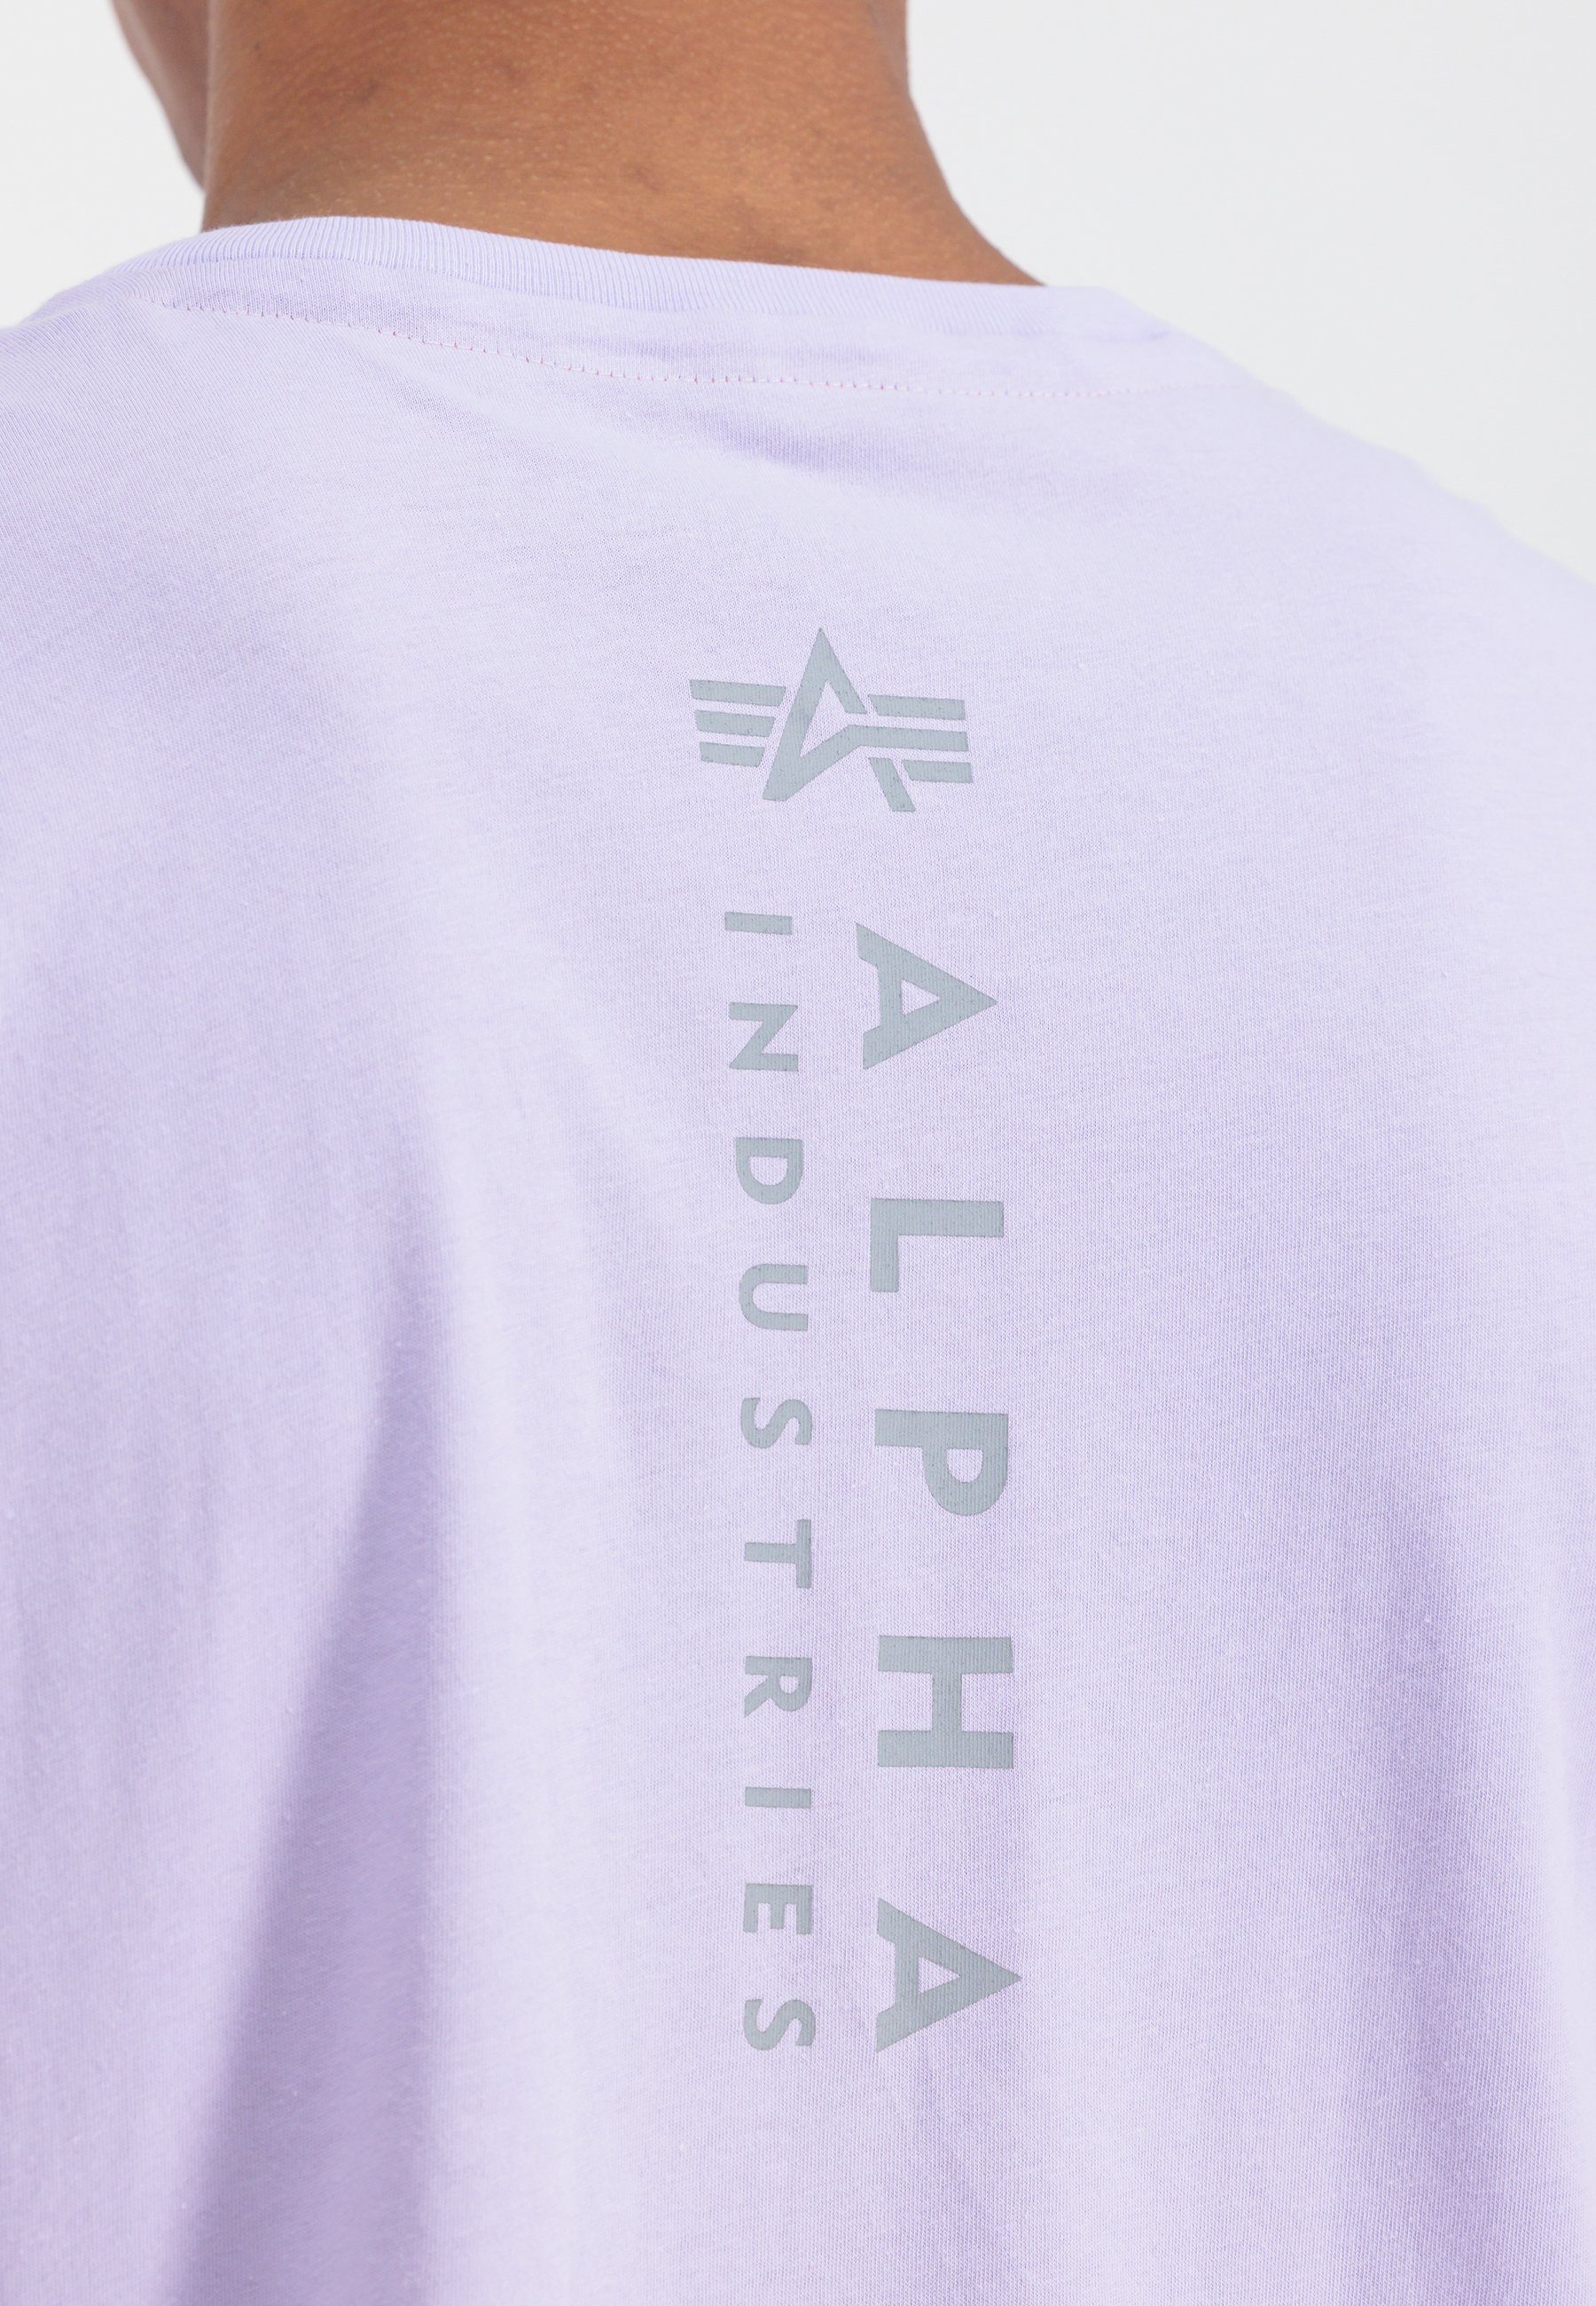 Alpha T-Shirts violet Industries - Unisex Industries T-Shirt pale Alpha Men EMB T-Shirt